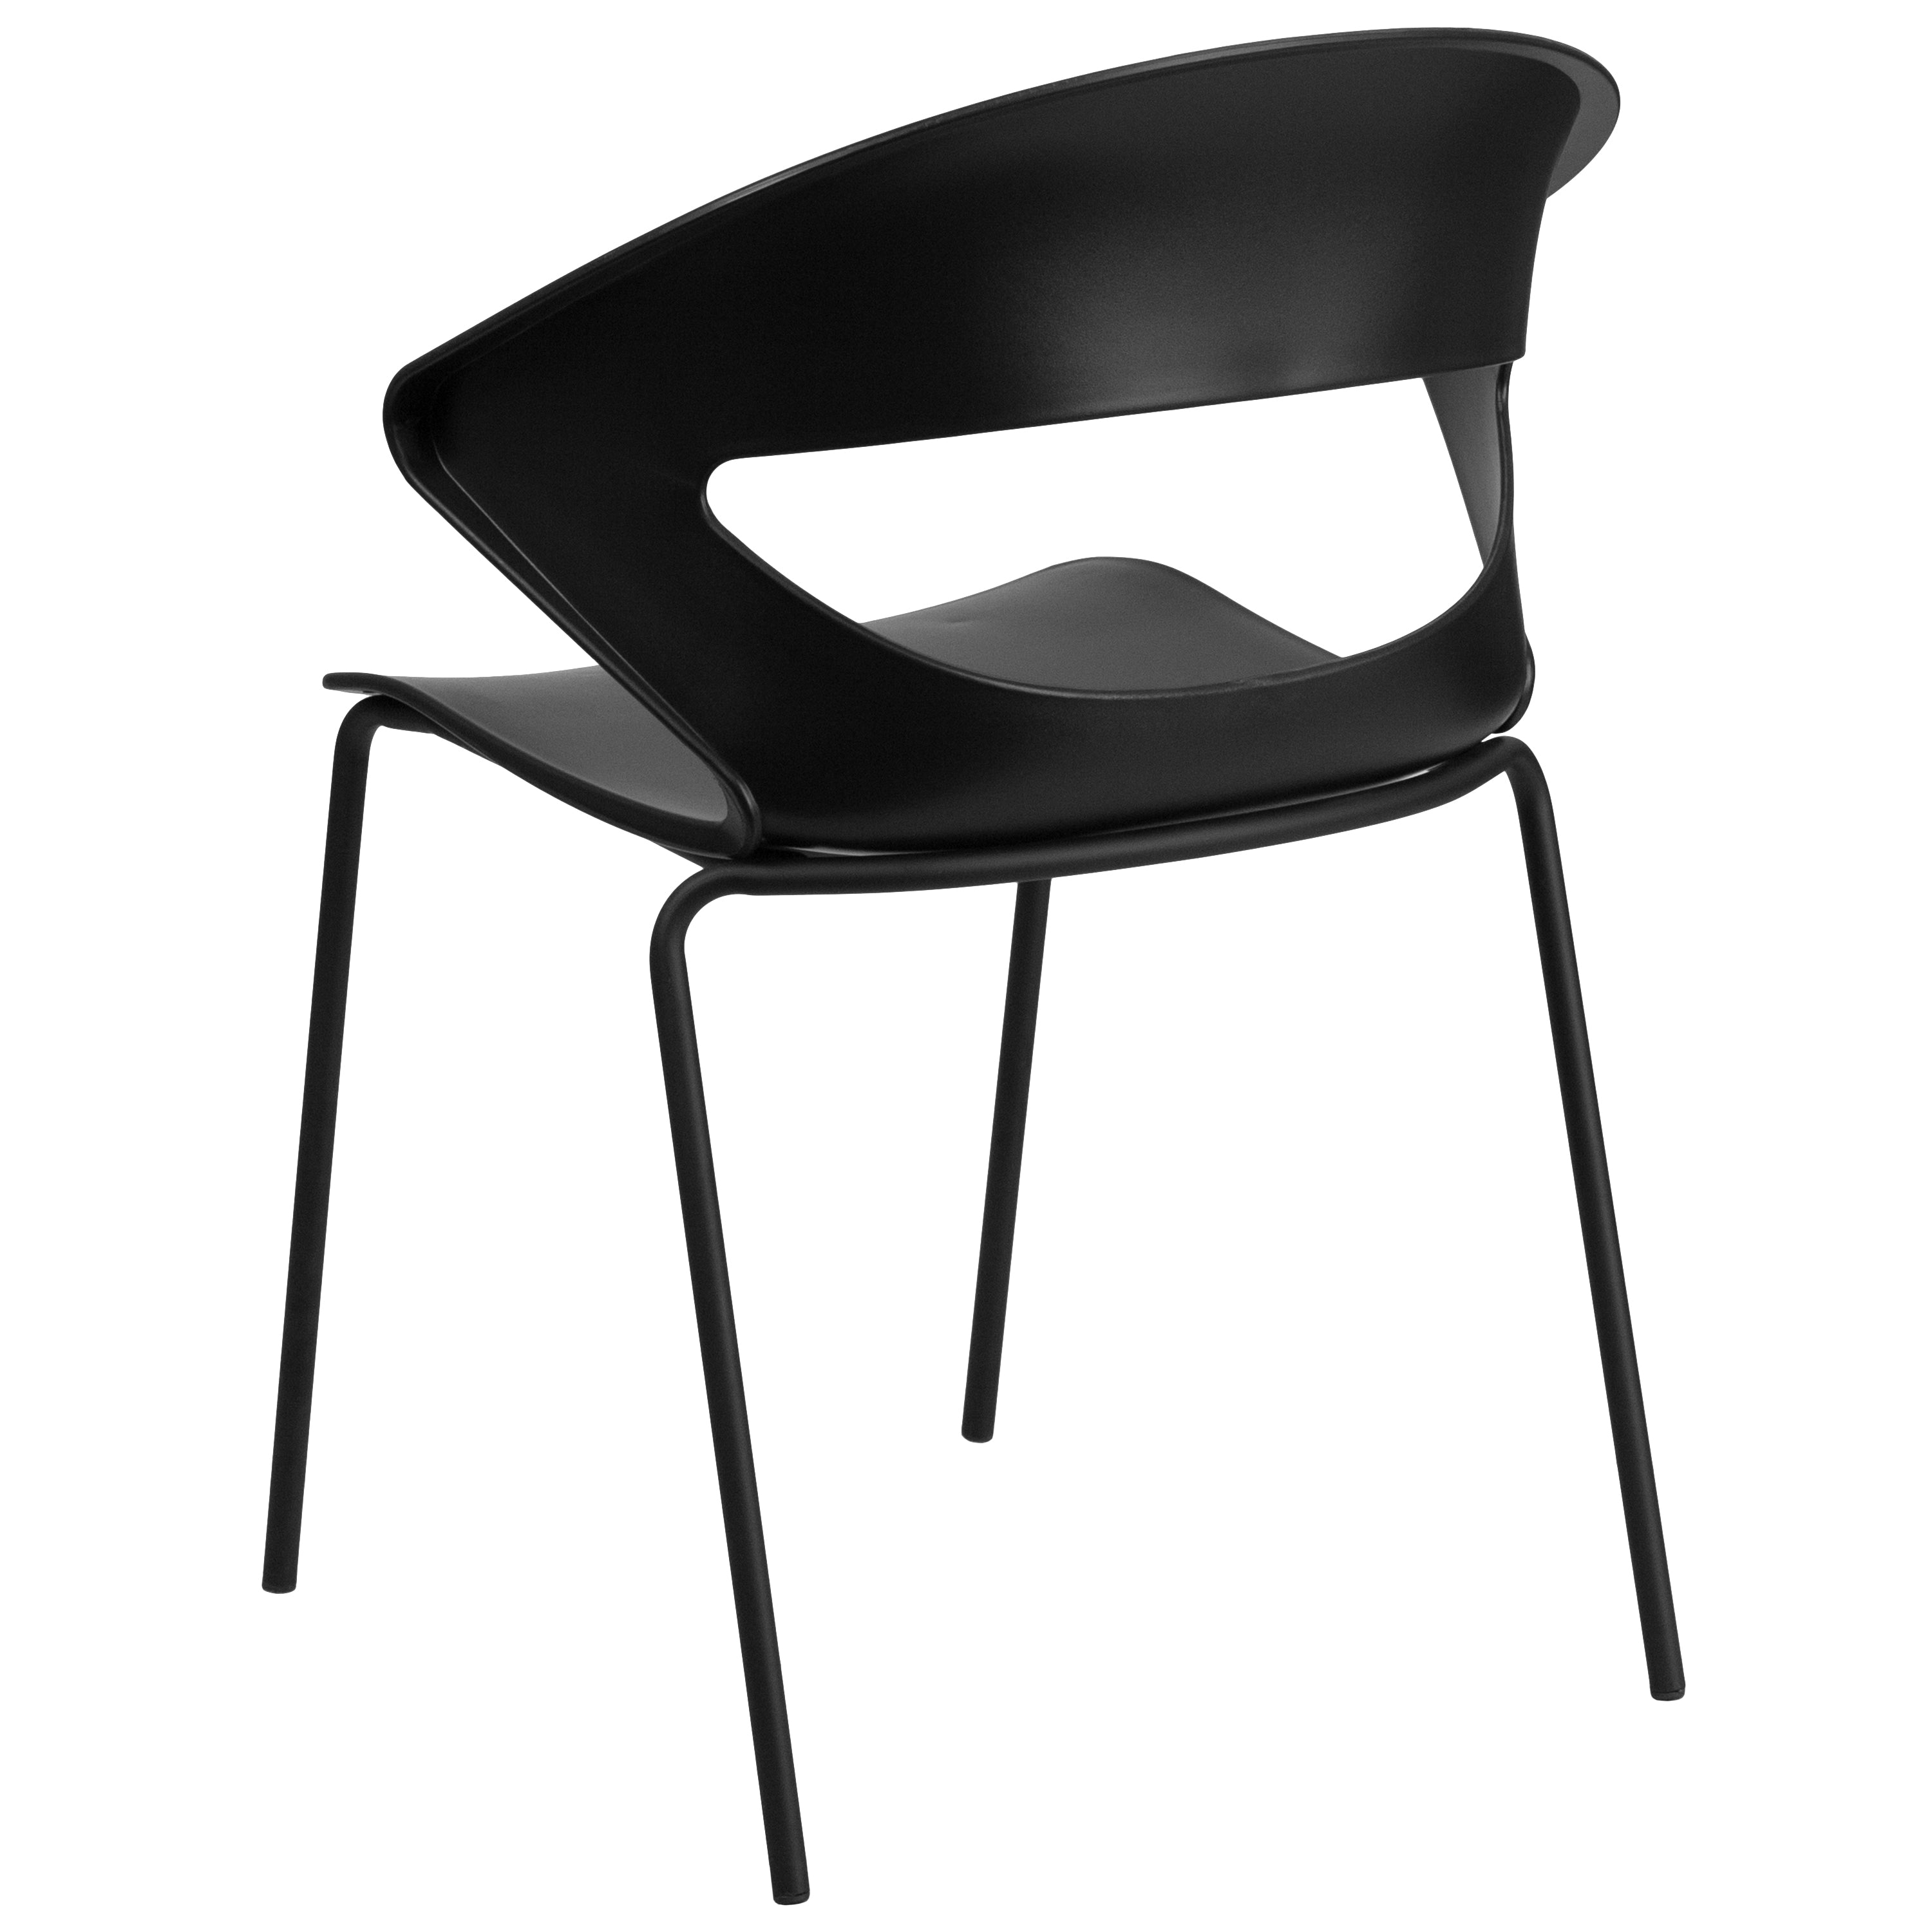 HERCULES Series 440 lb. Capacity Stack Chair-Plastic Stack Chair-Flash Furniture-Wall2Wall Furnishings